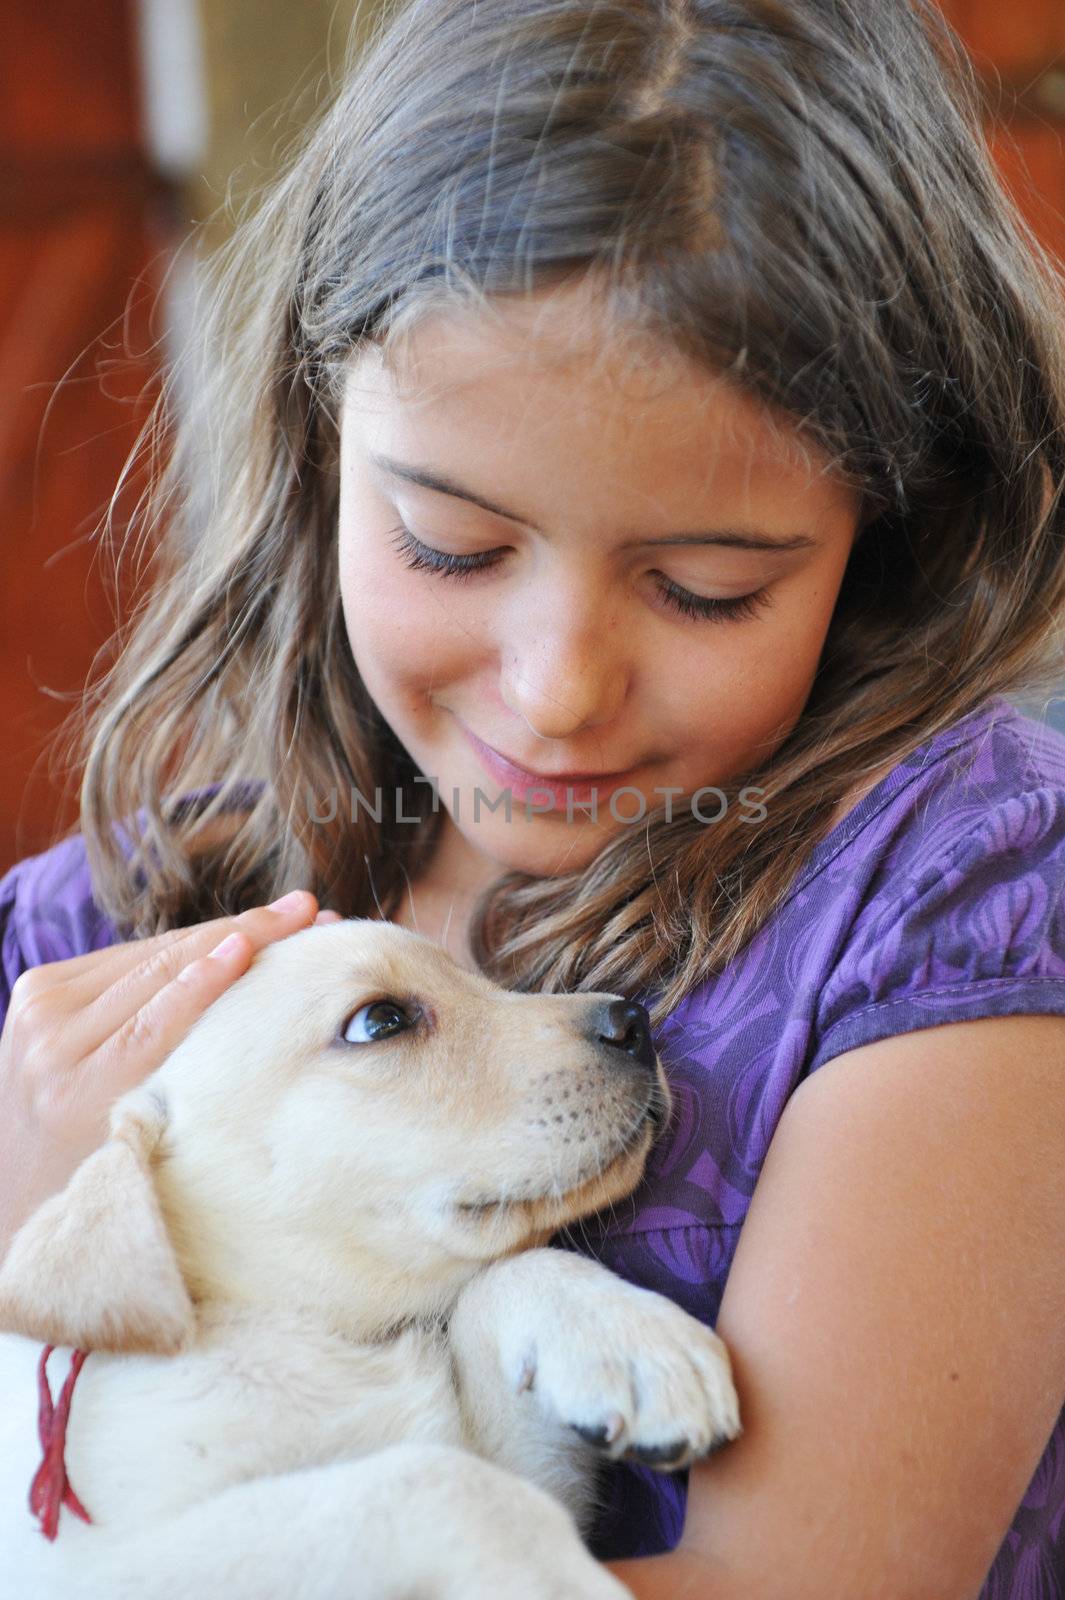 puppy labrador retriever and little girl by cynoclub